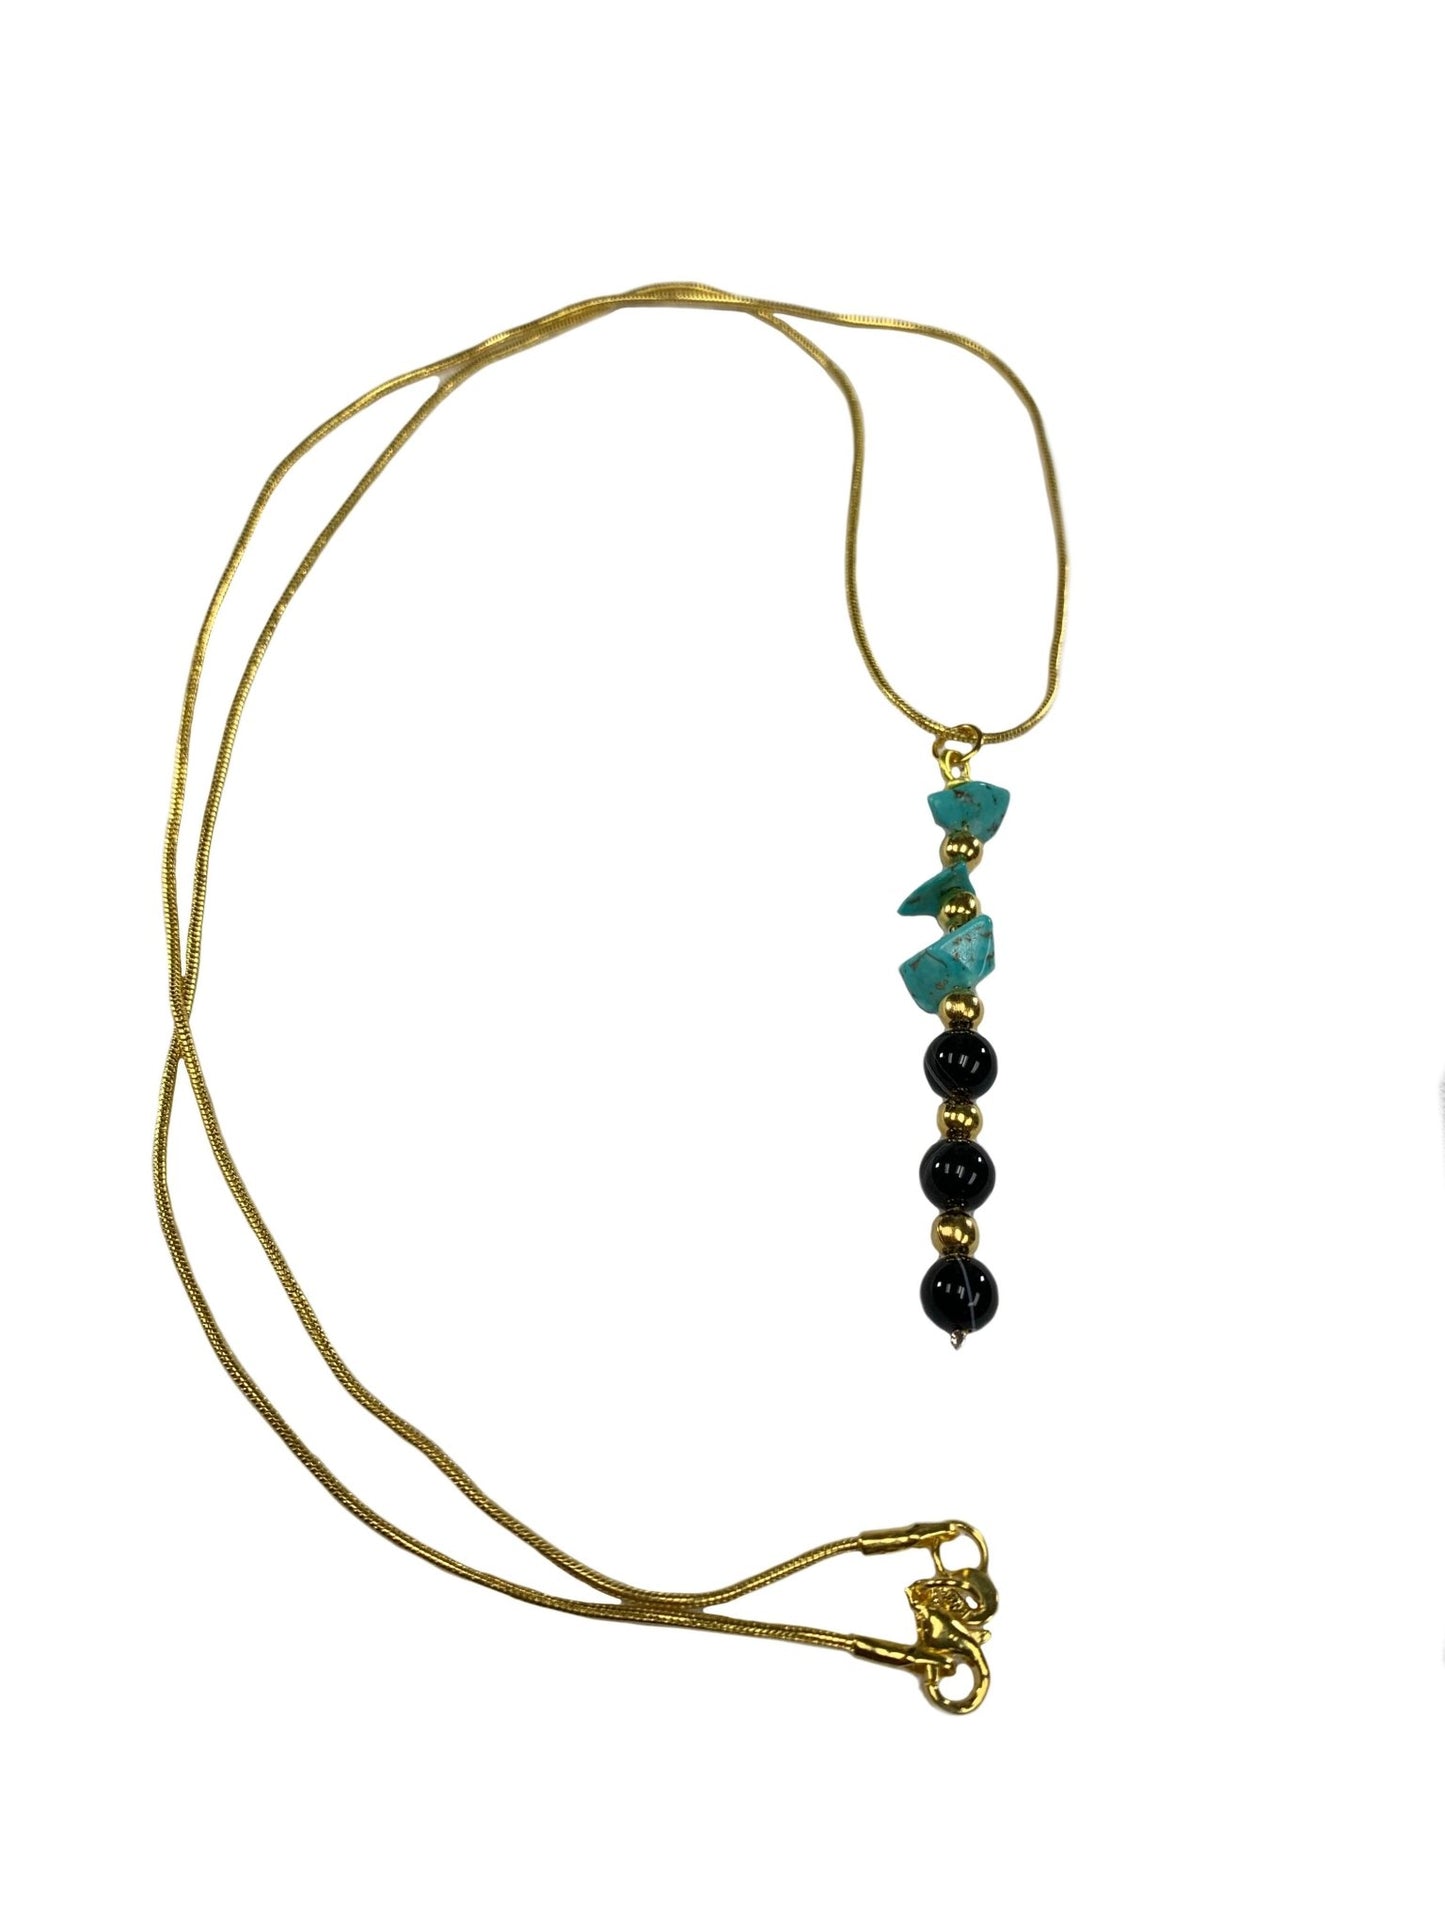 🔴SOLD🔴 Monica Handmade Genuine Turquoise and Onyx Pendant Necklace - Born Mystics